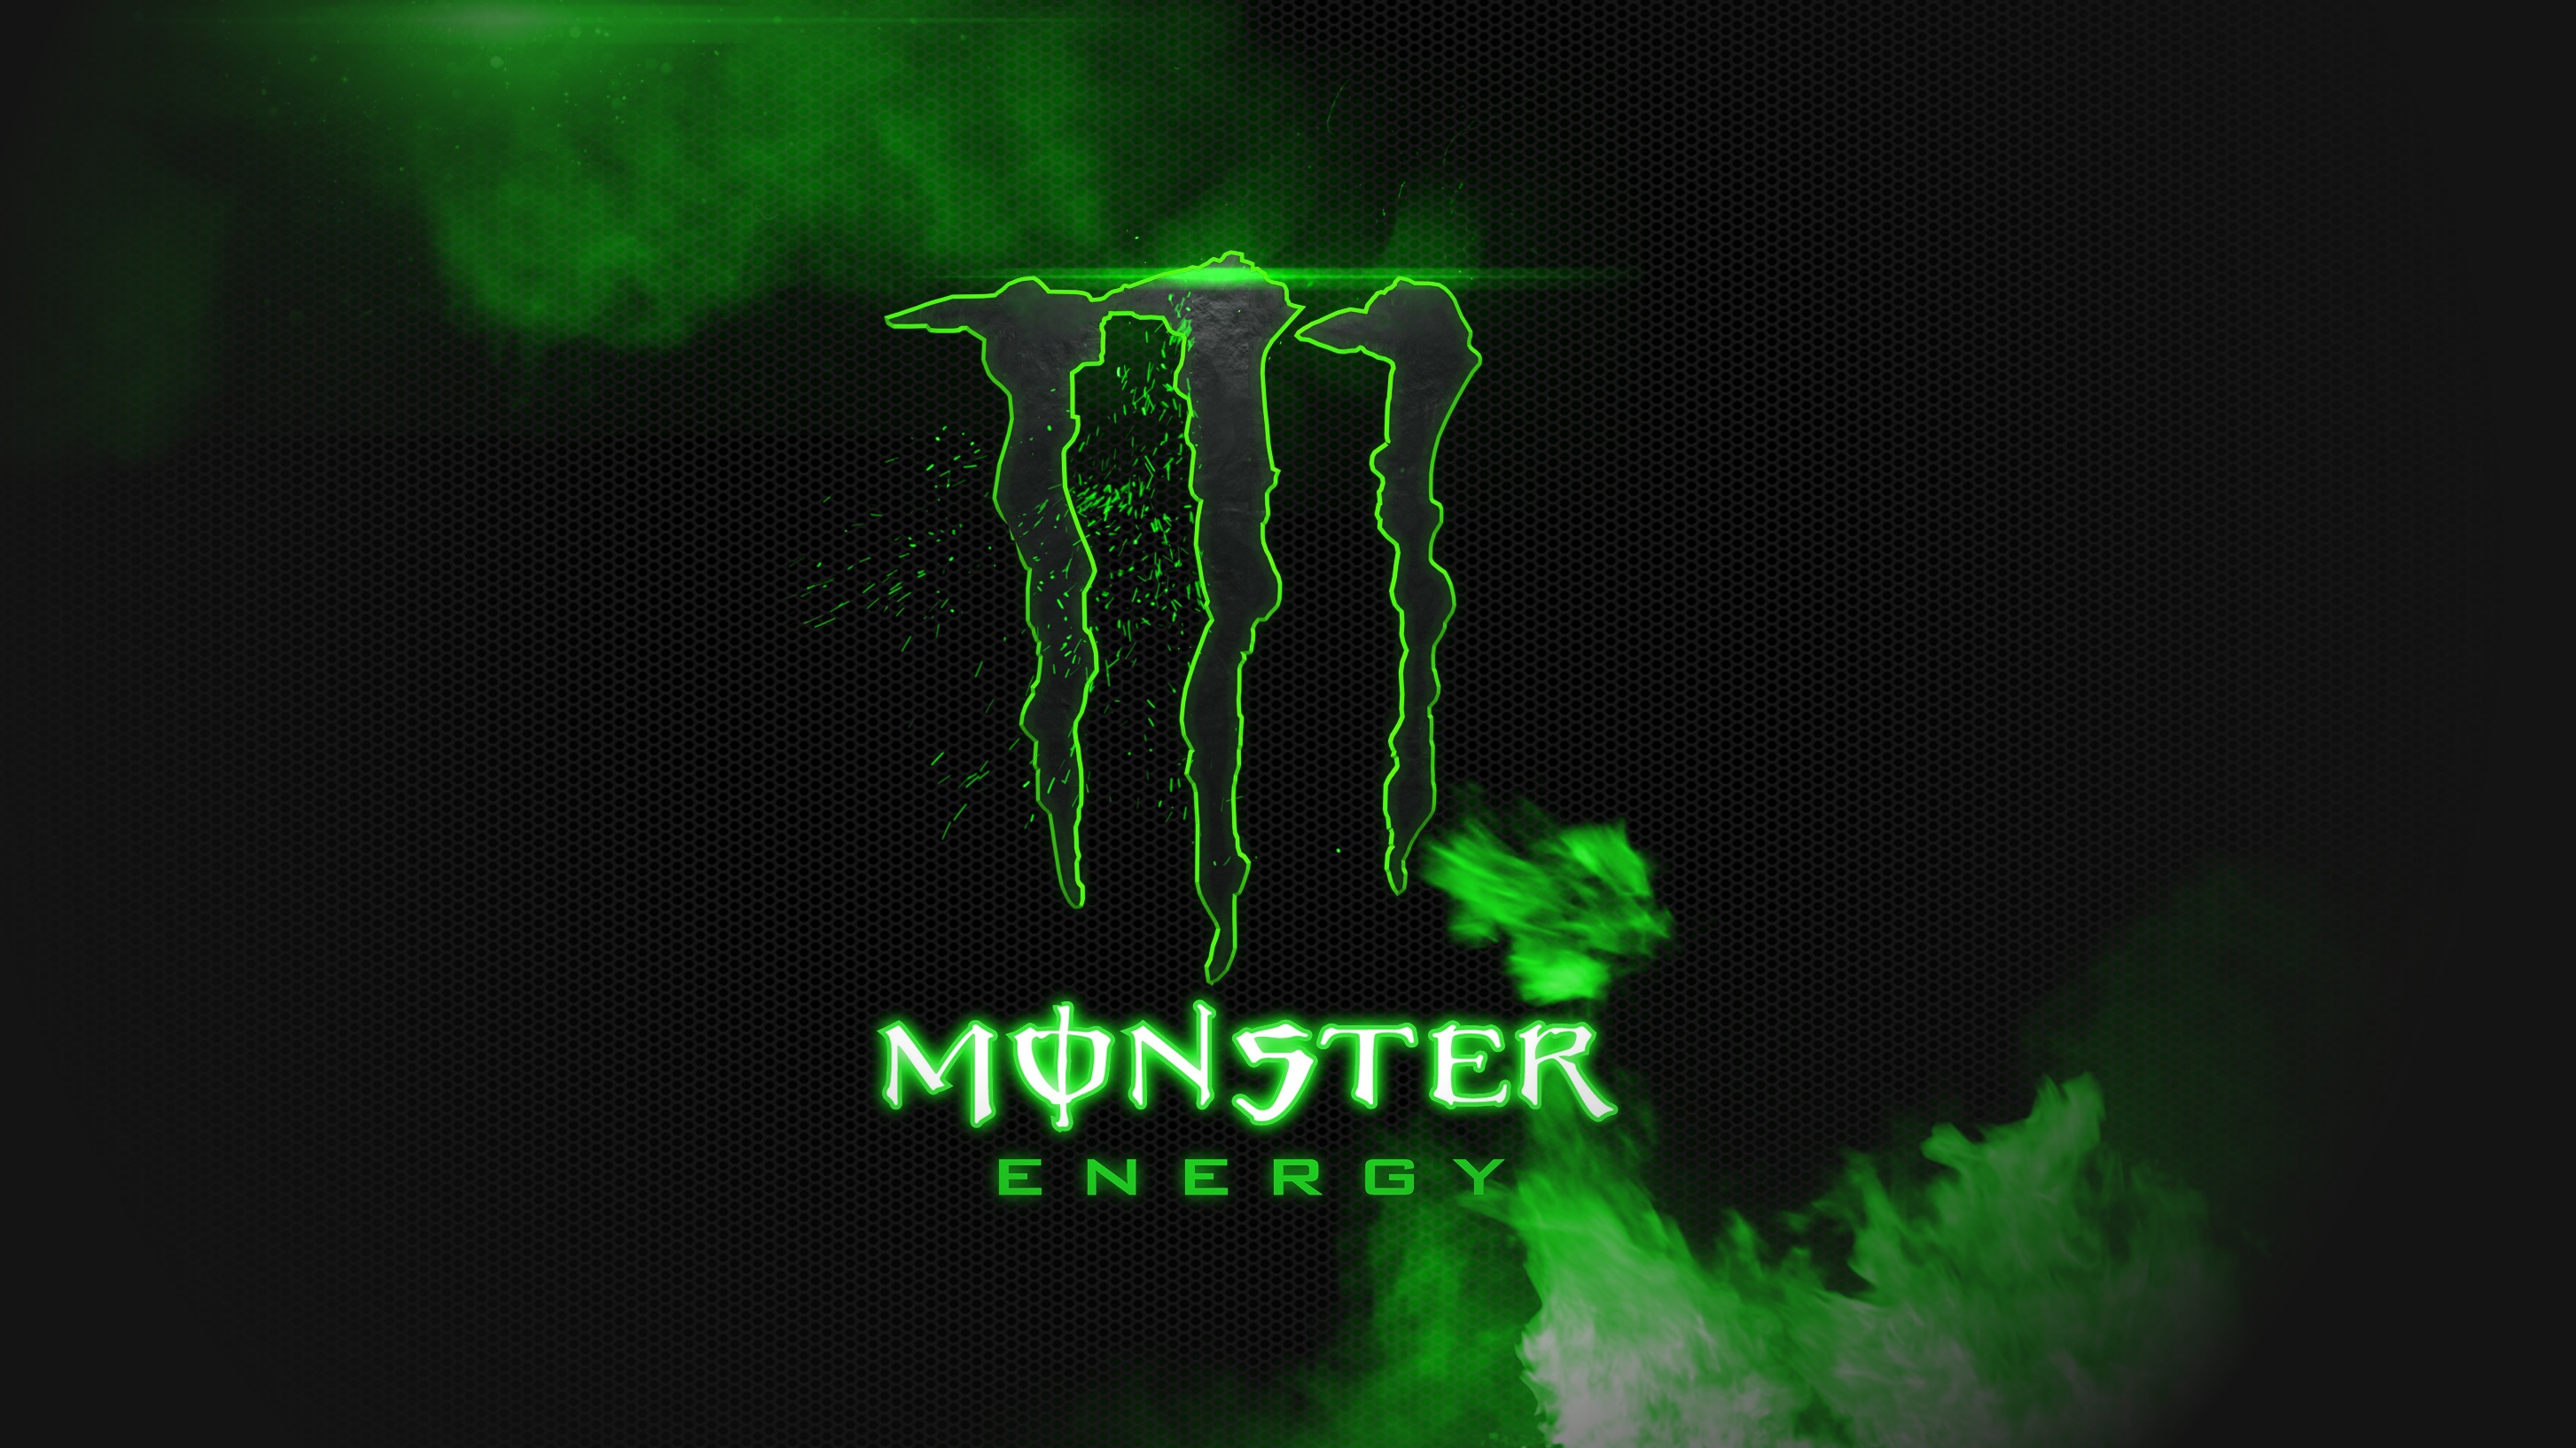 Monster Energy Logo Wallpaper 17373 Wallpaper Wallpaper hd 2906x1634